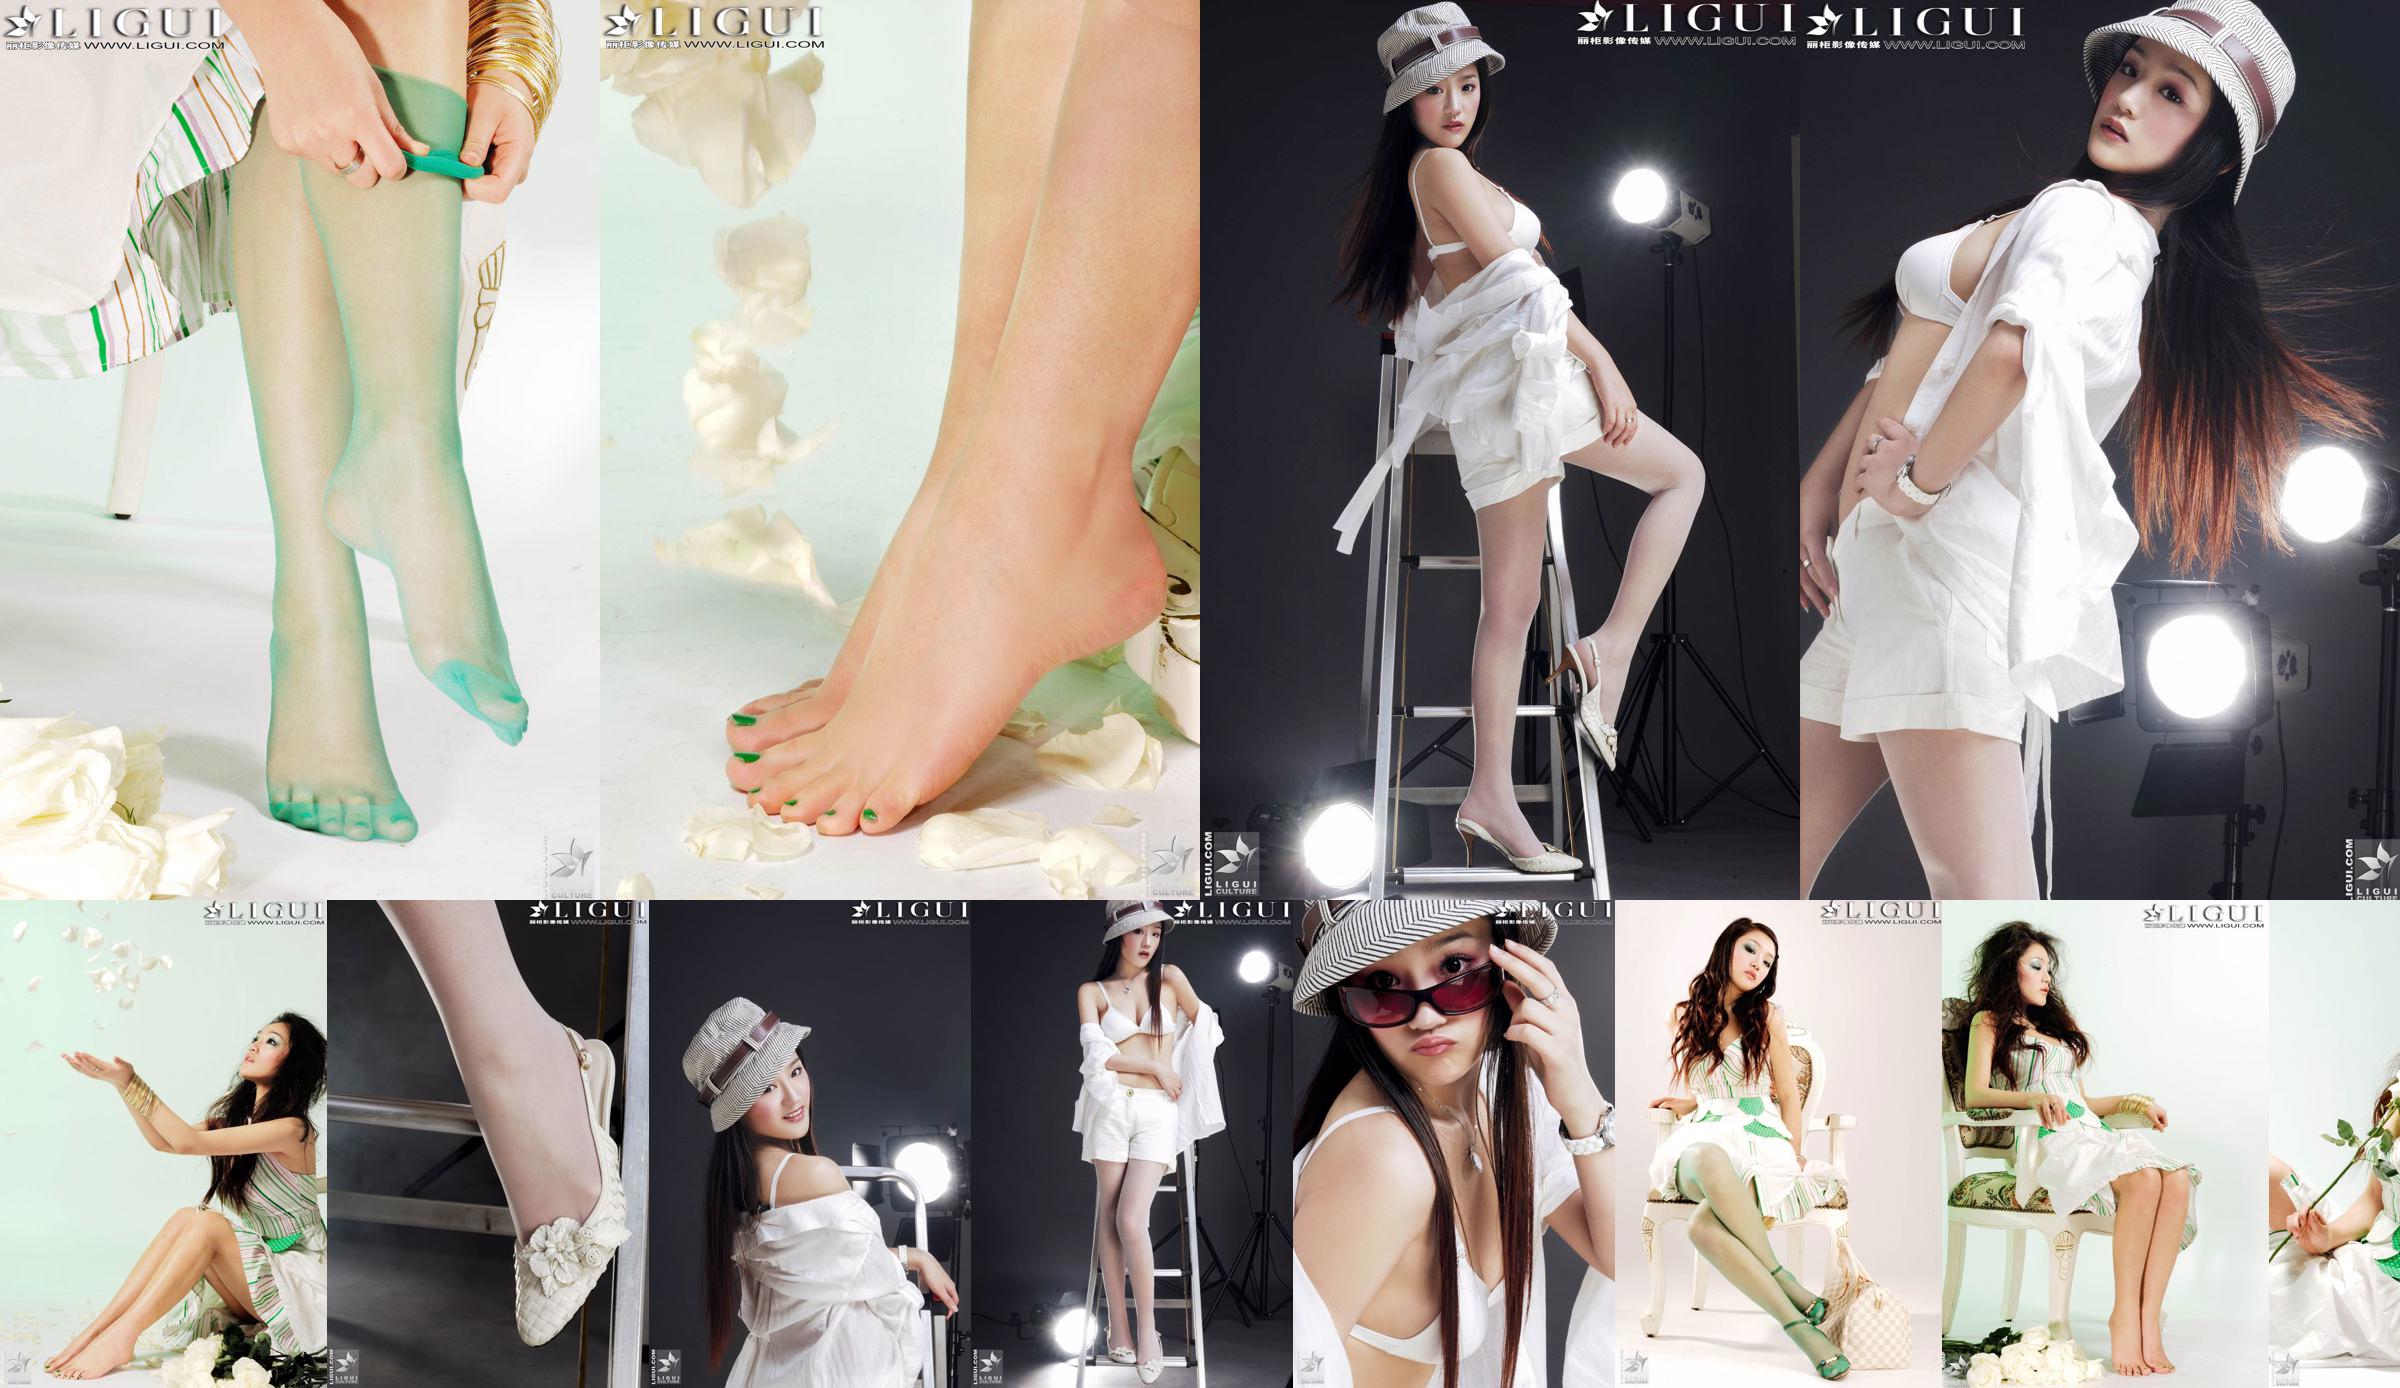 [丽 柜 贵 pied LiGui] La photo "Pied à la mode" du modèle Zhang Jingyan de belles jambes et pieds en soie No.3c8625 Page 8